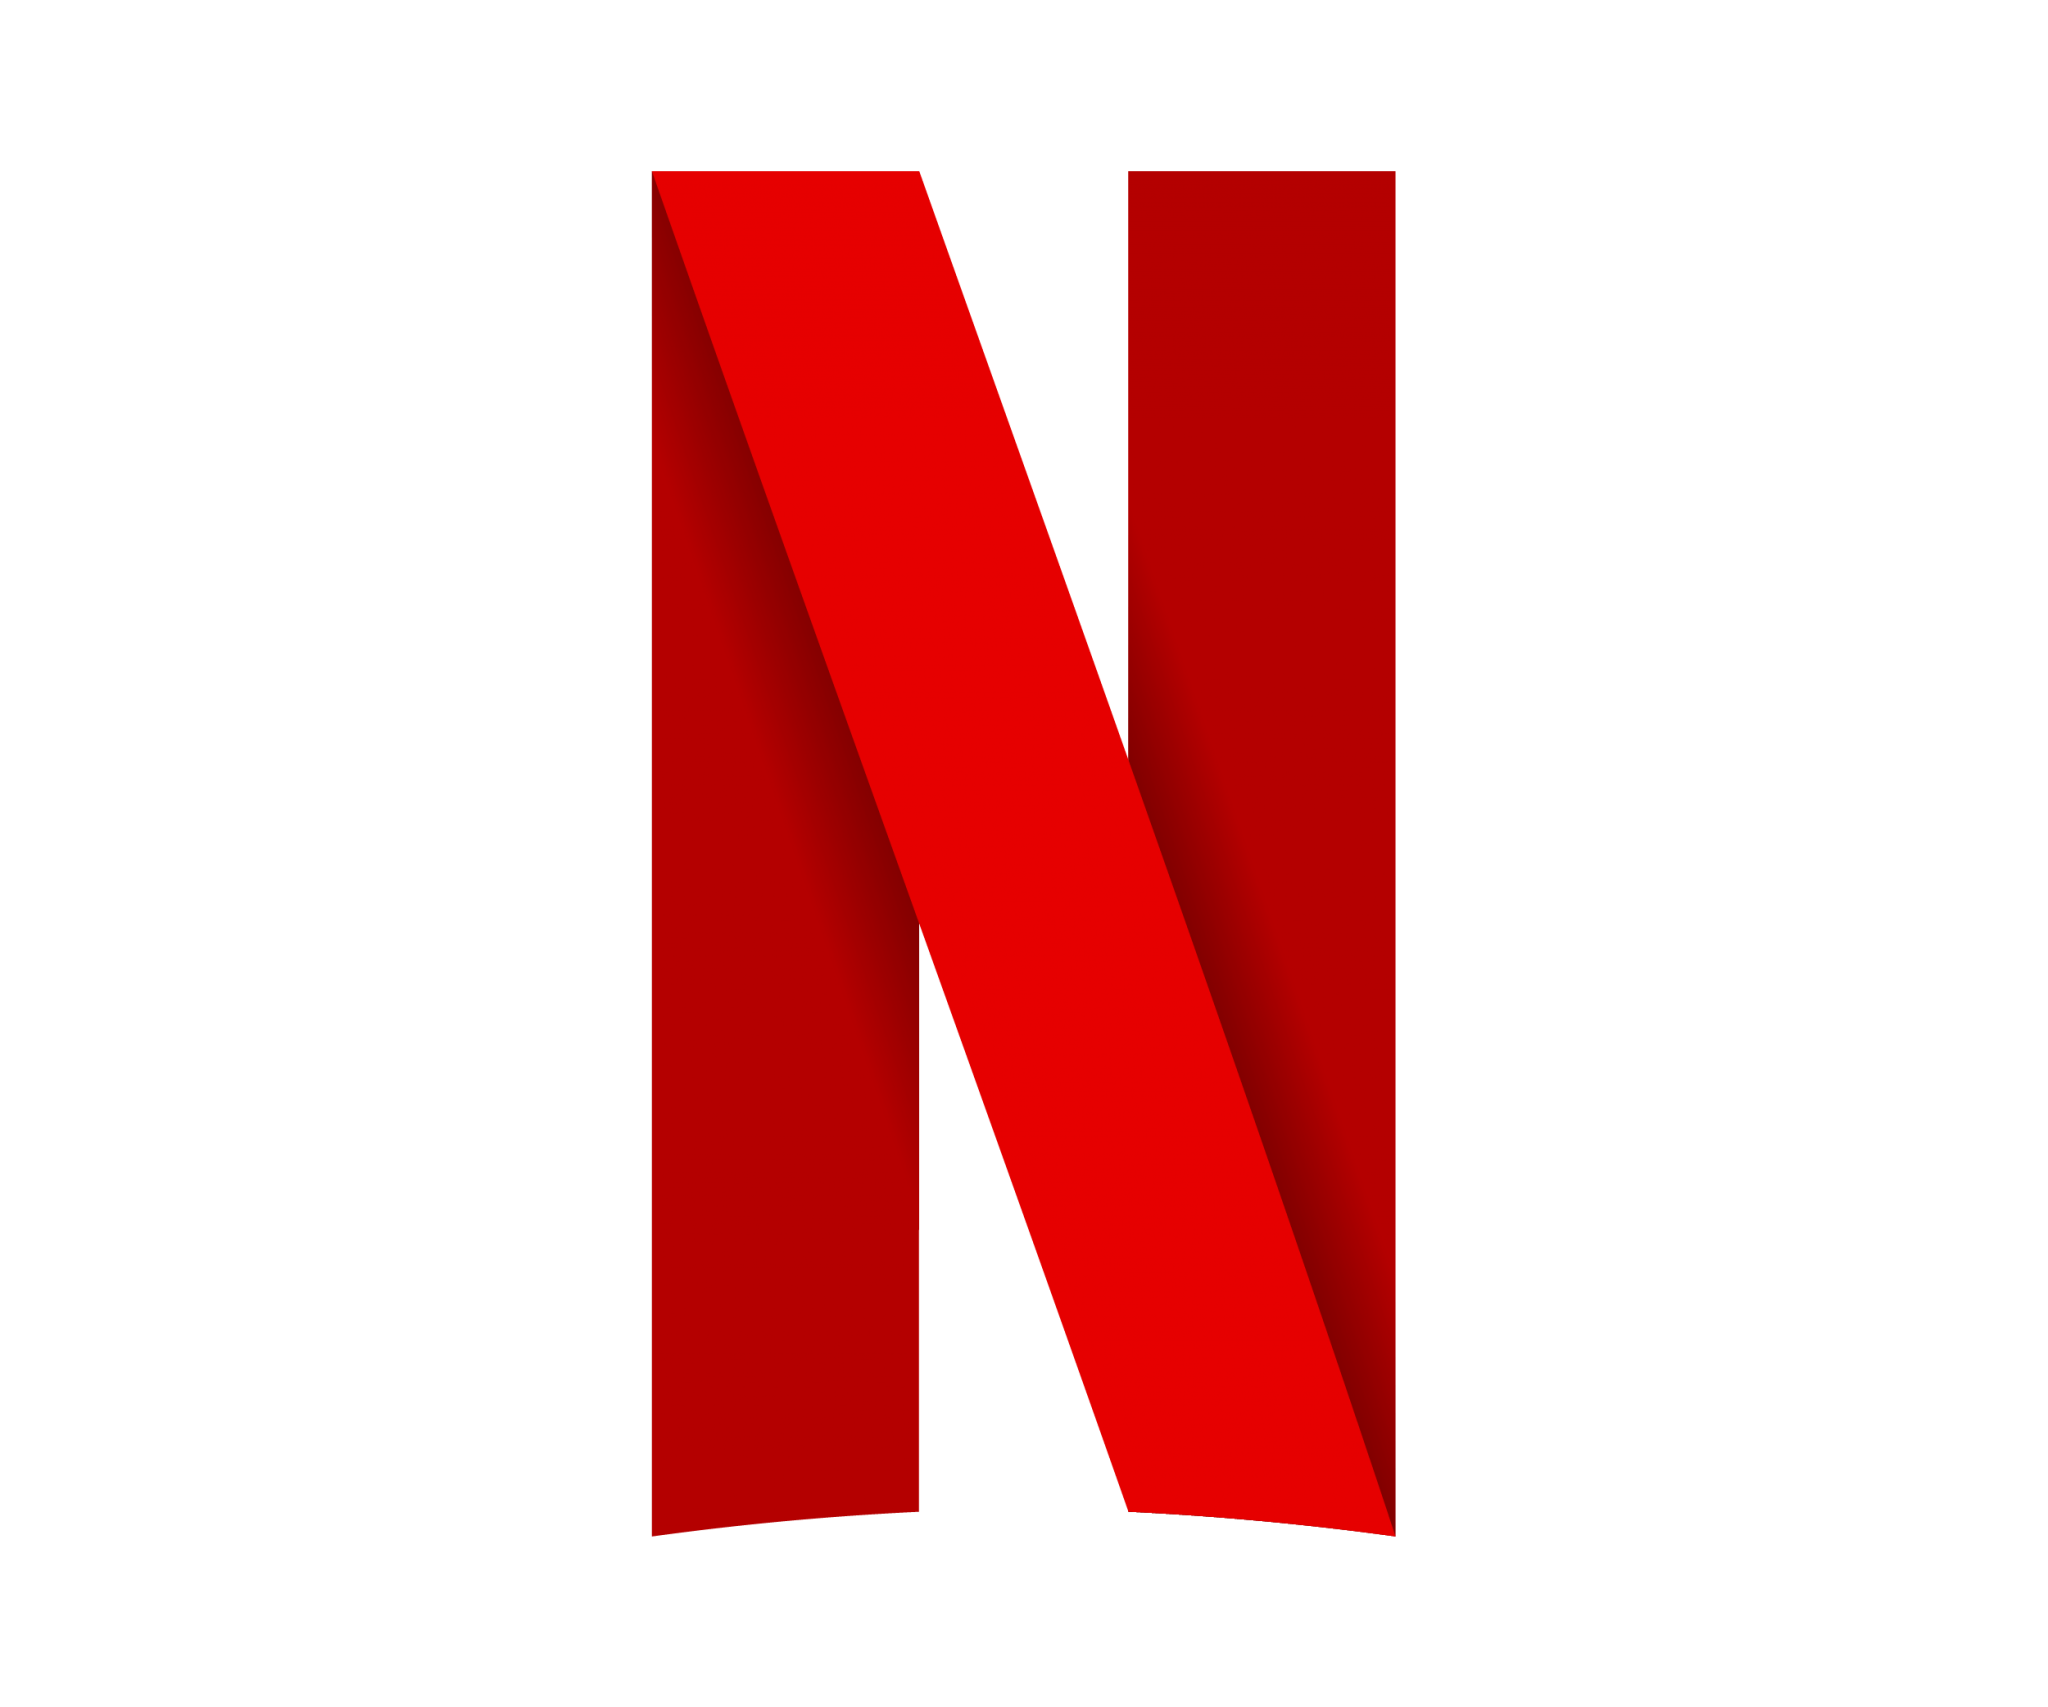 Netflix logo and symbol - Design, history and evolution - Netflix Logo Evolution